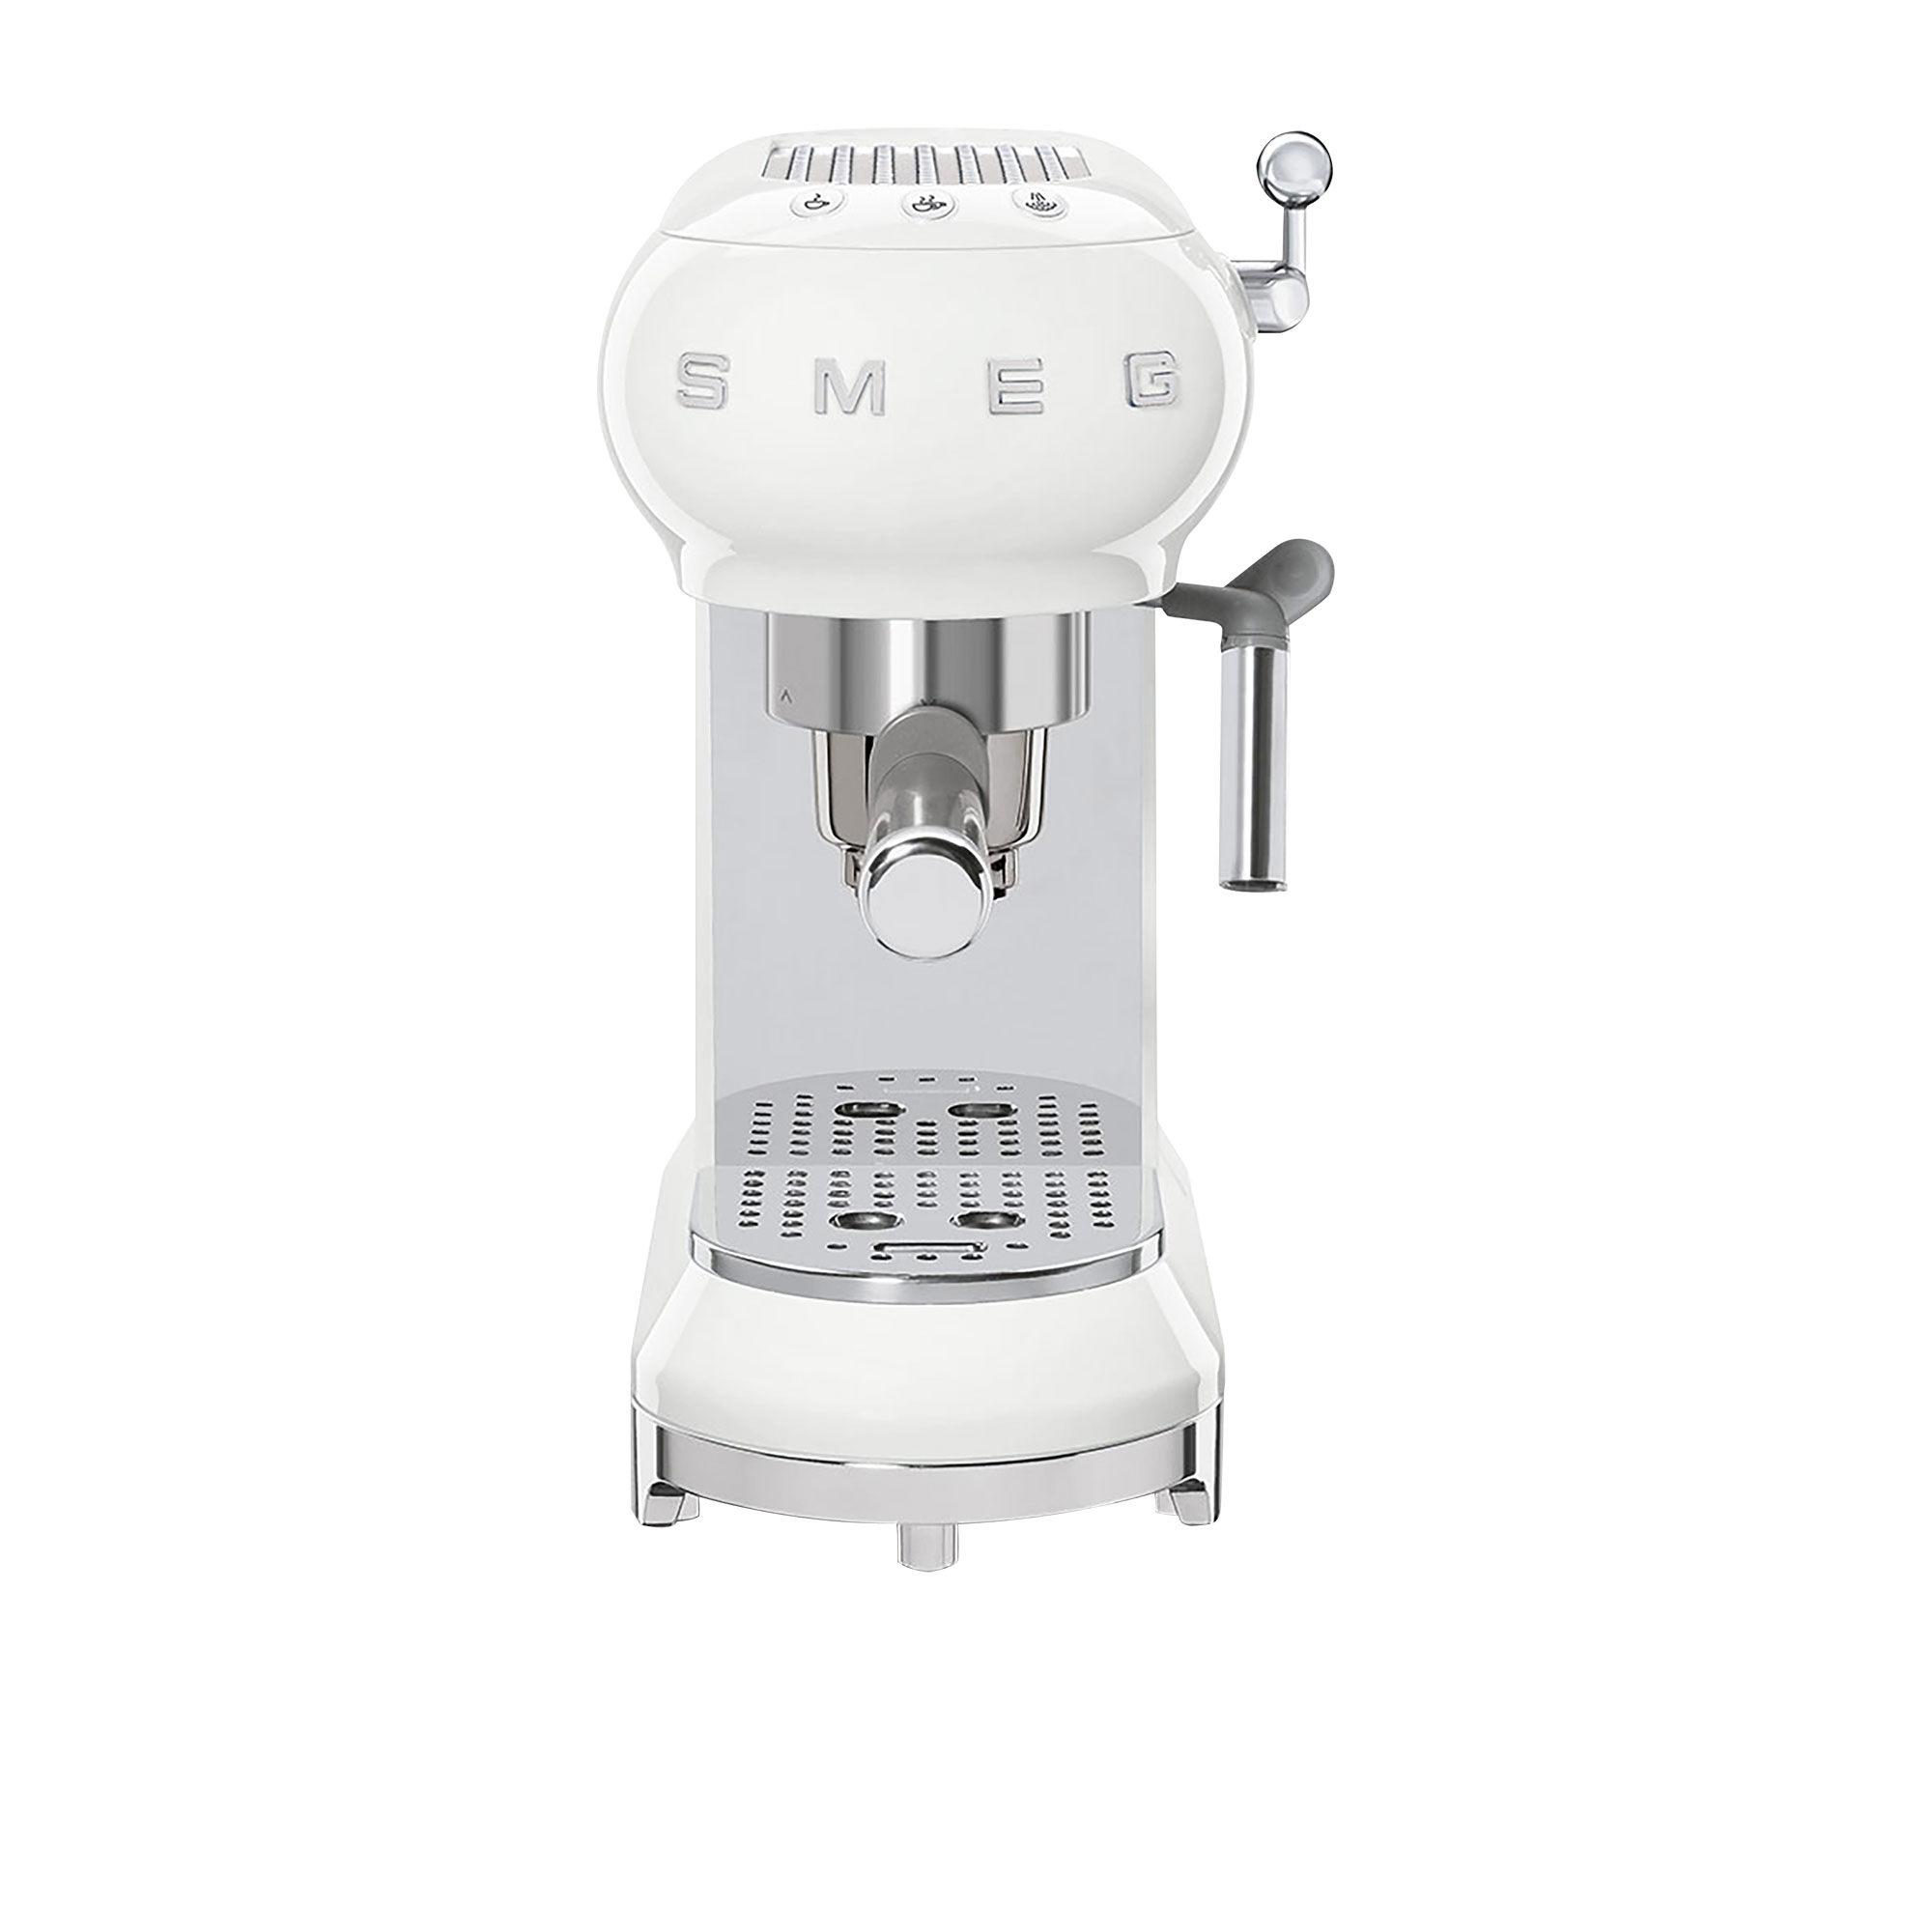 Smeg 50's Retro Style Espresso Coffee Machine White Image 4